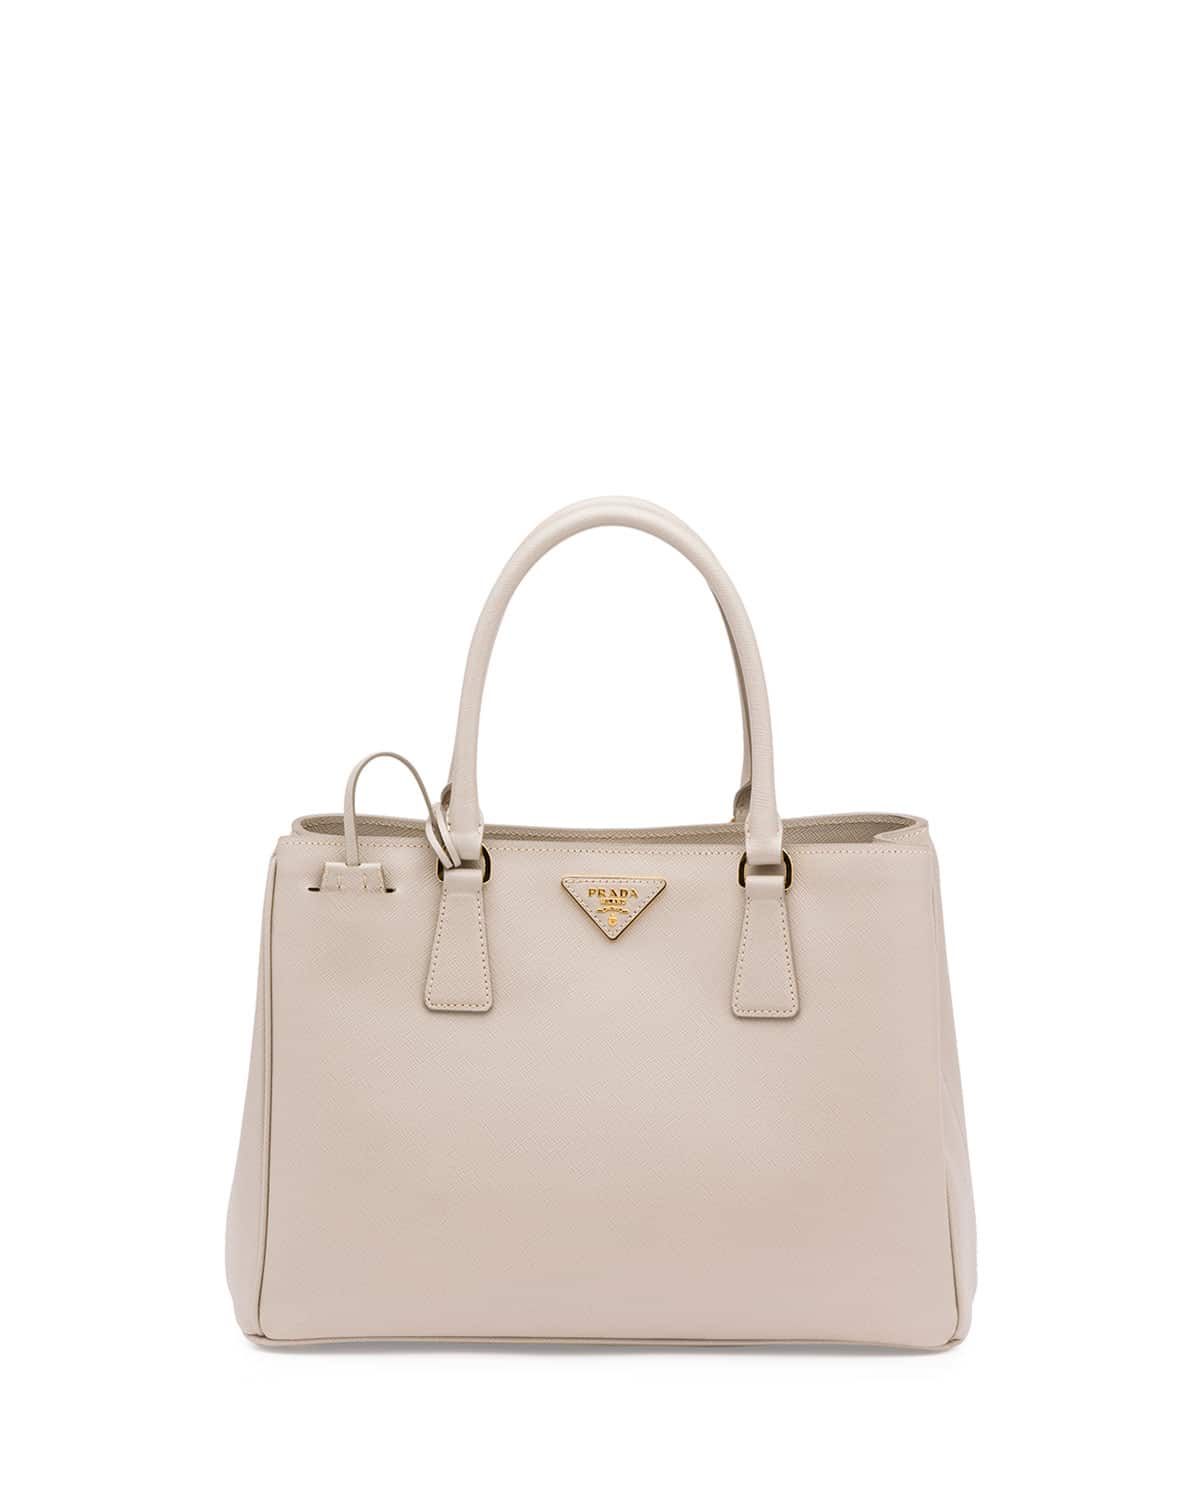 Prada Resort 2016 Bag Collection Featuring Perforated Handbags ...  